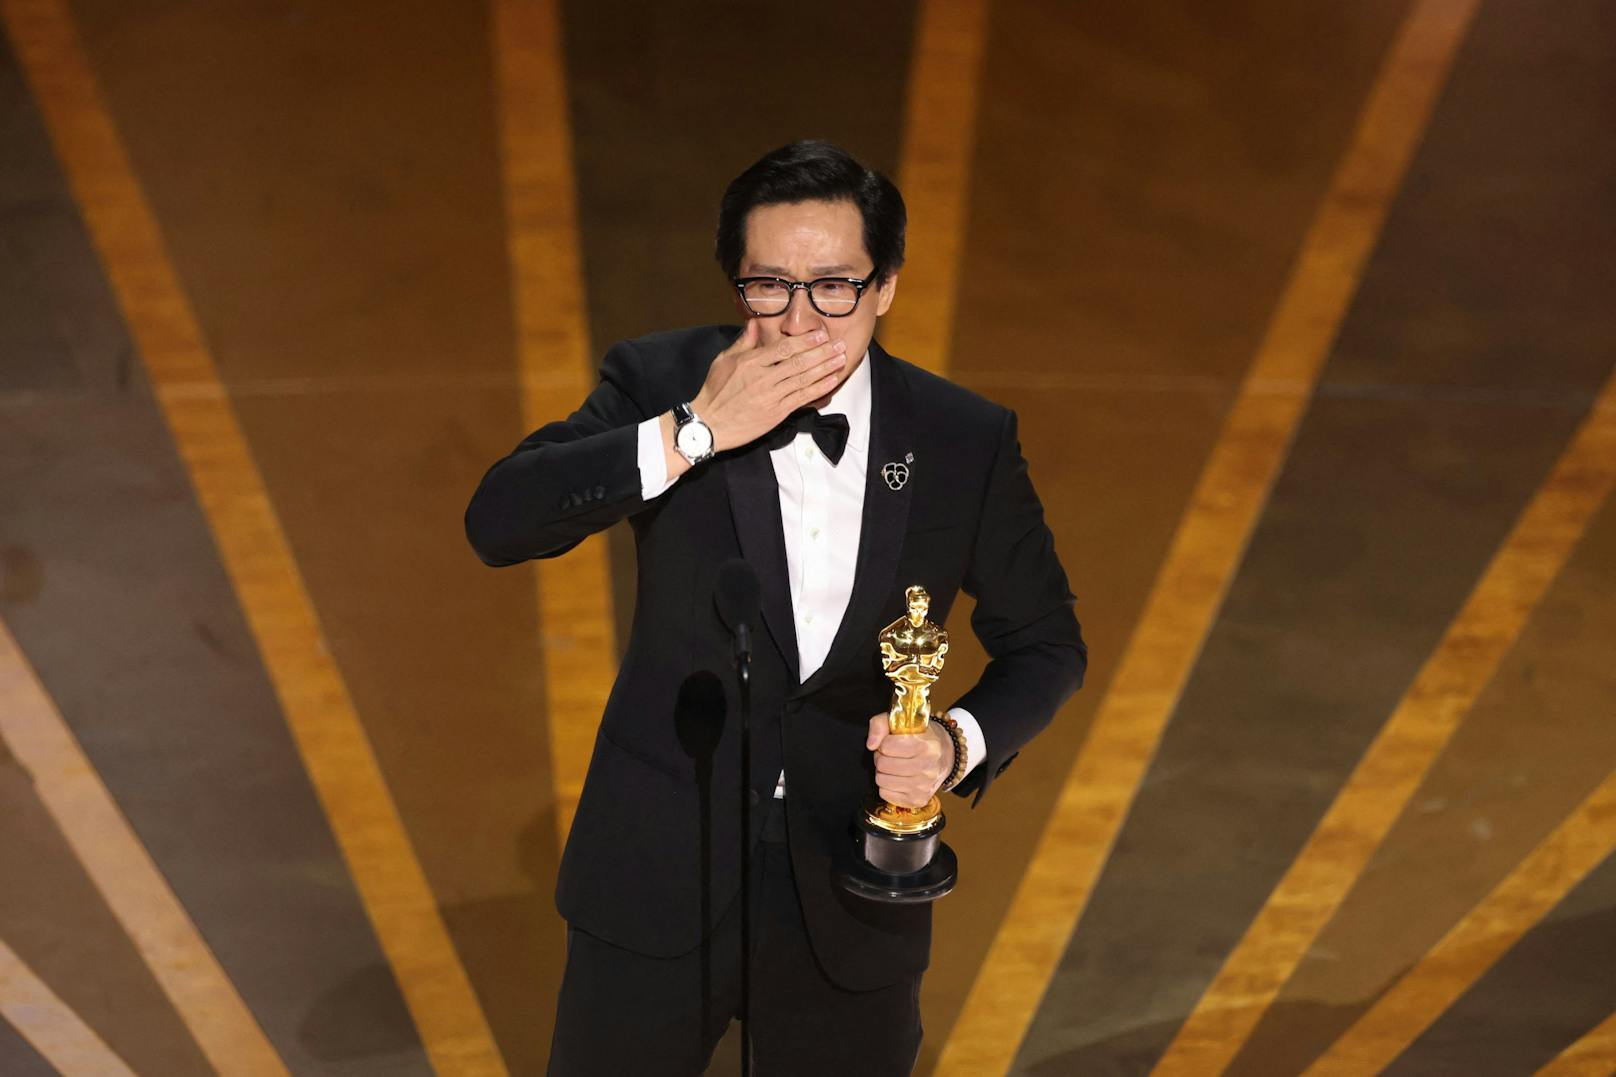 Ke Huy Quan gewinnt den Oscar als "Bester Nebendarsteller". ("Everything Everywhere All At Once")